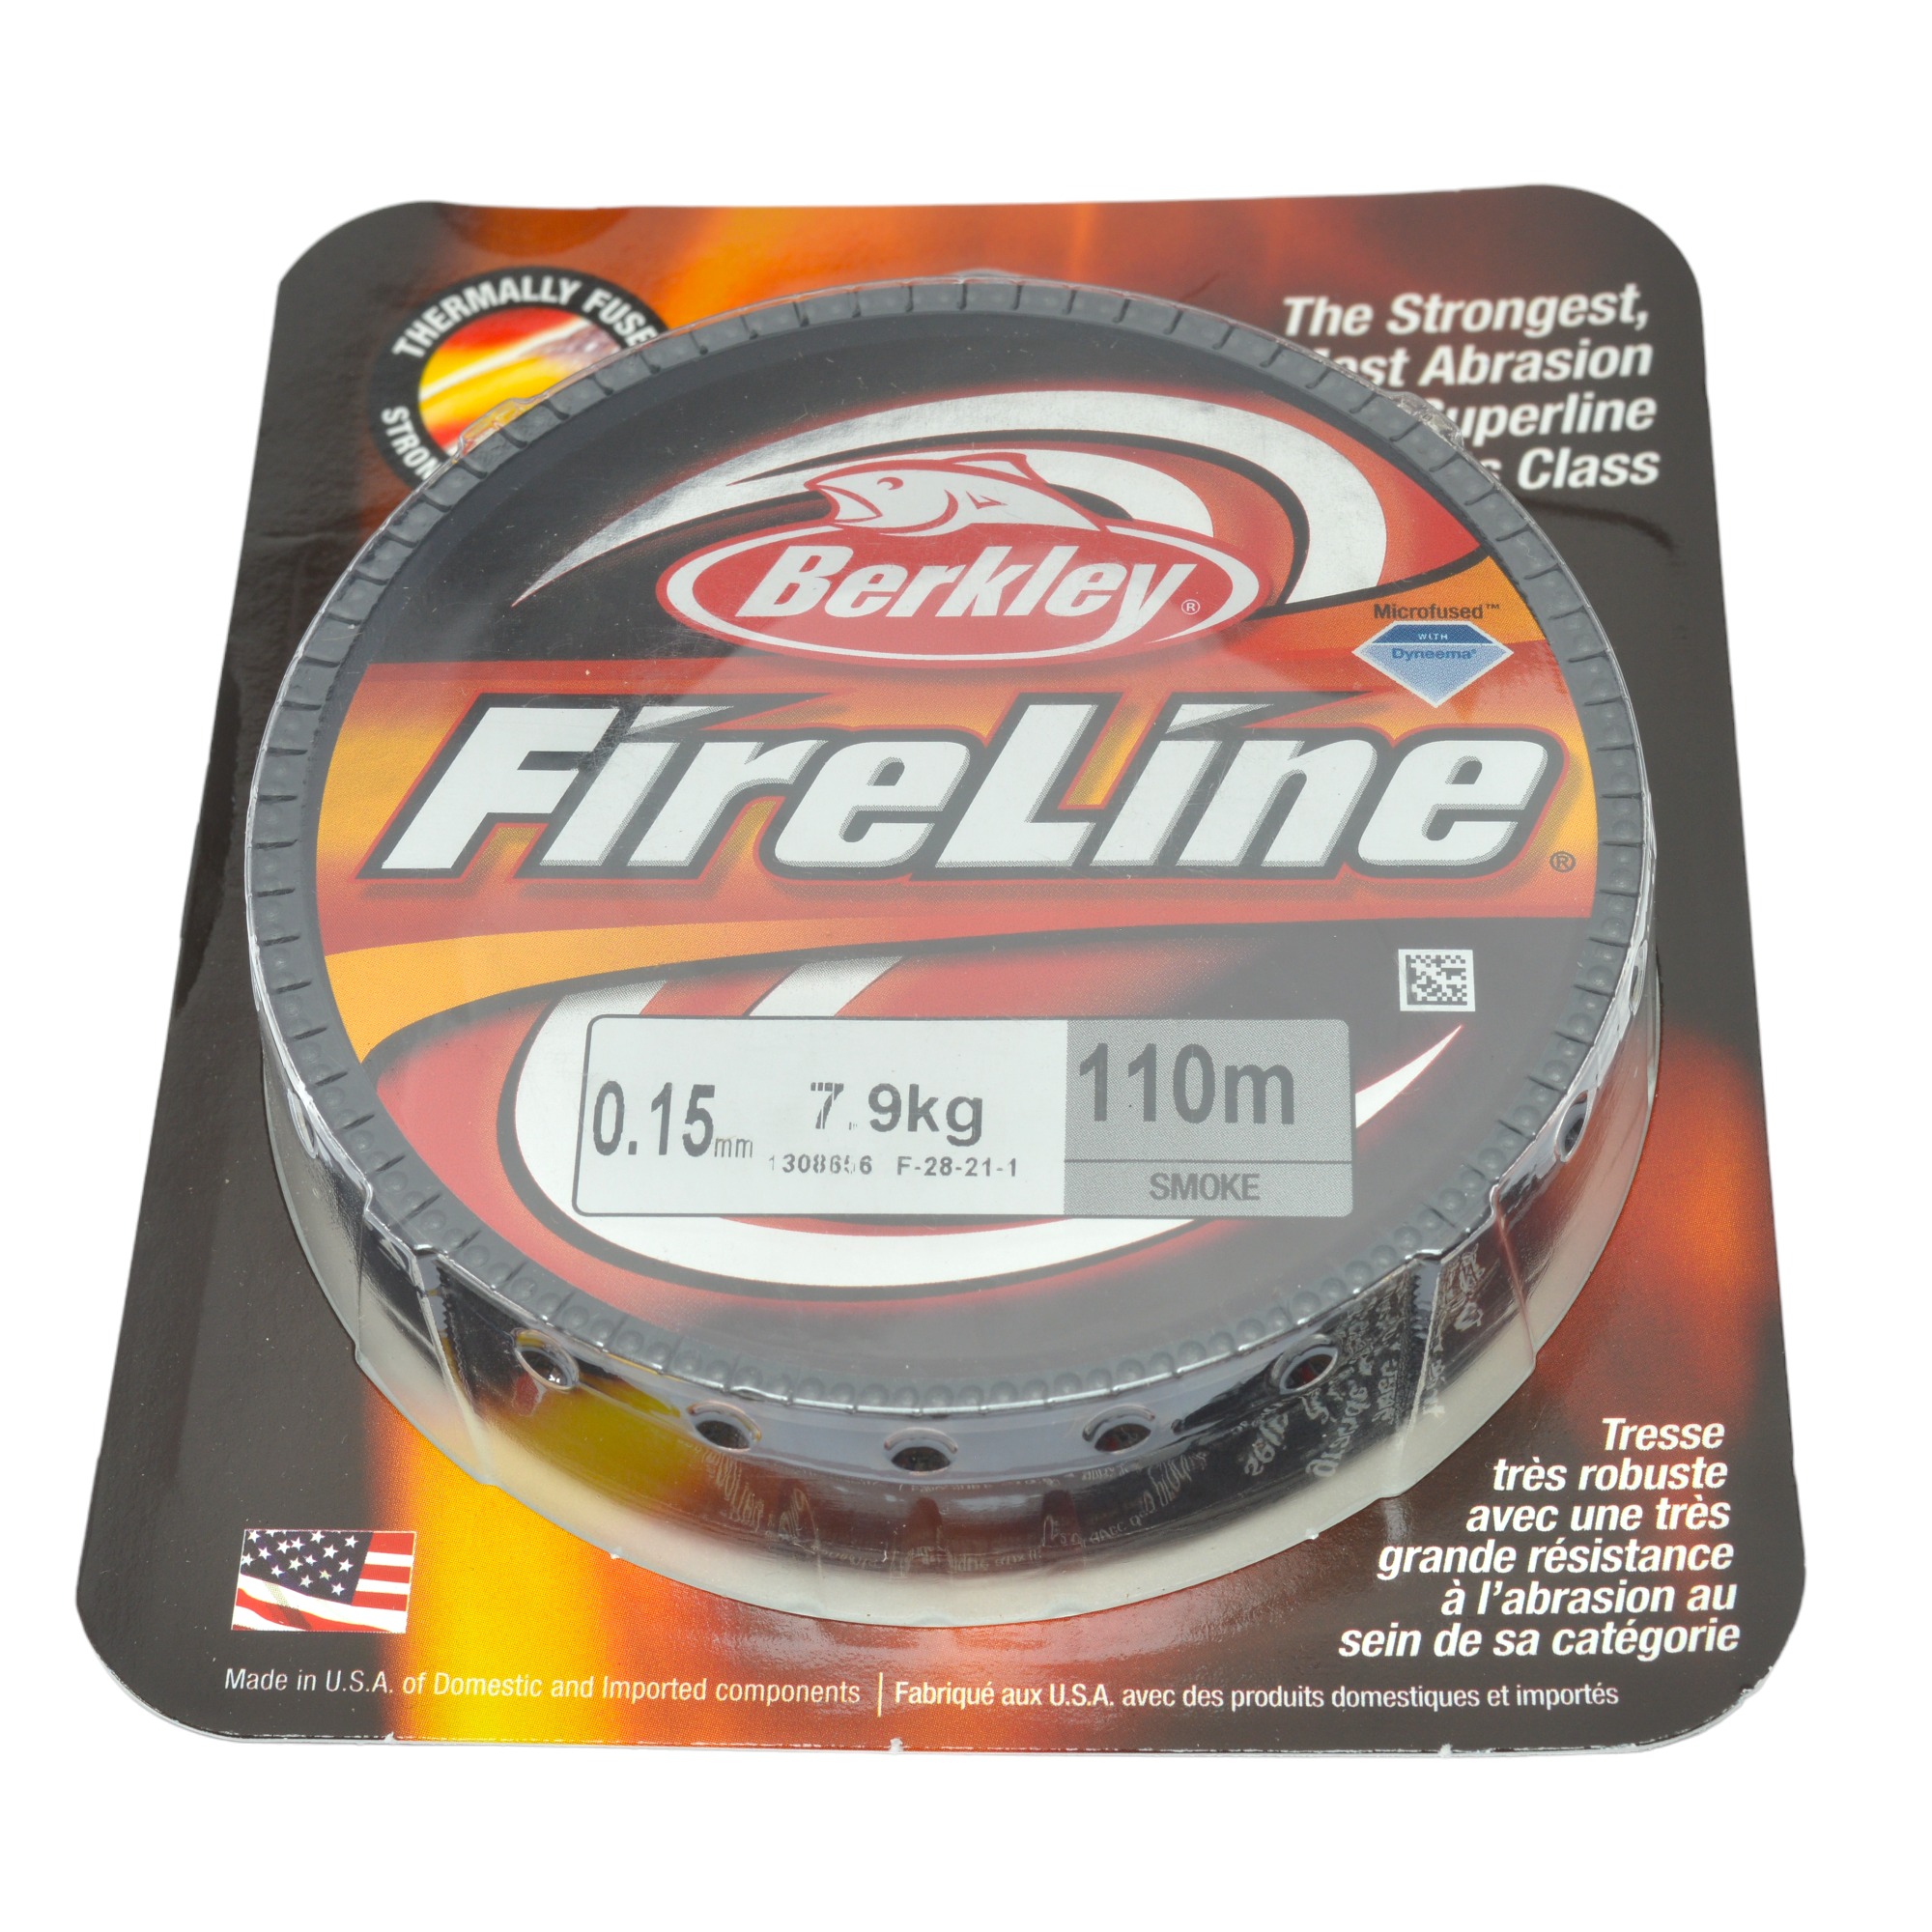 Fireline 0.15 mm smoke 110 m